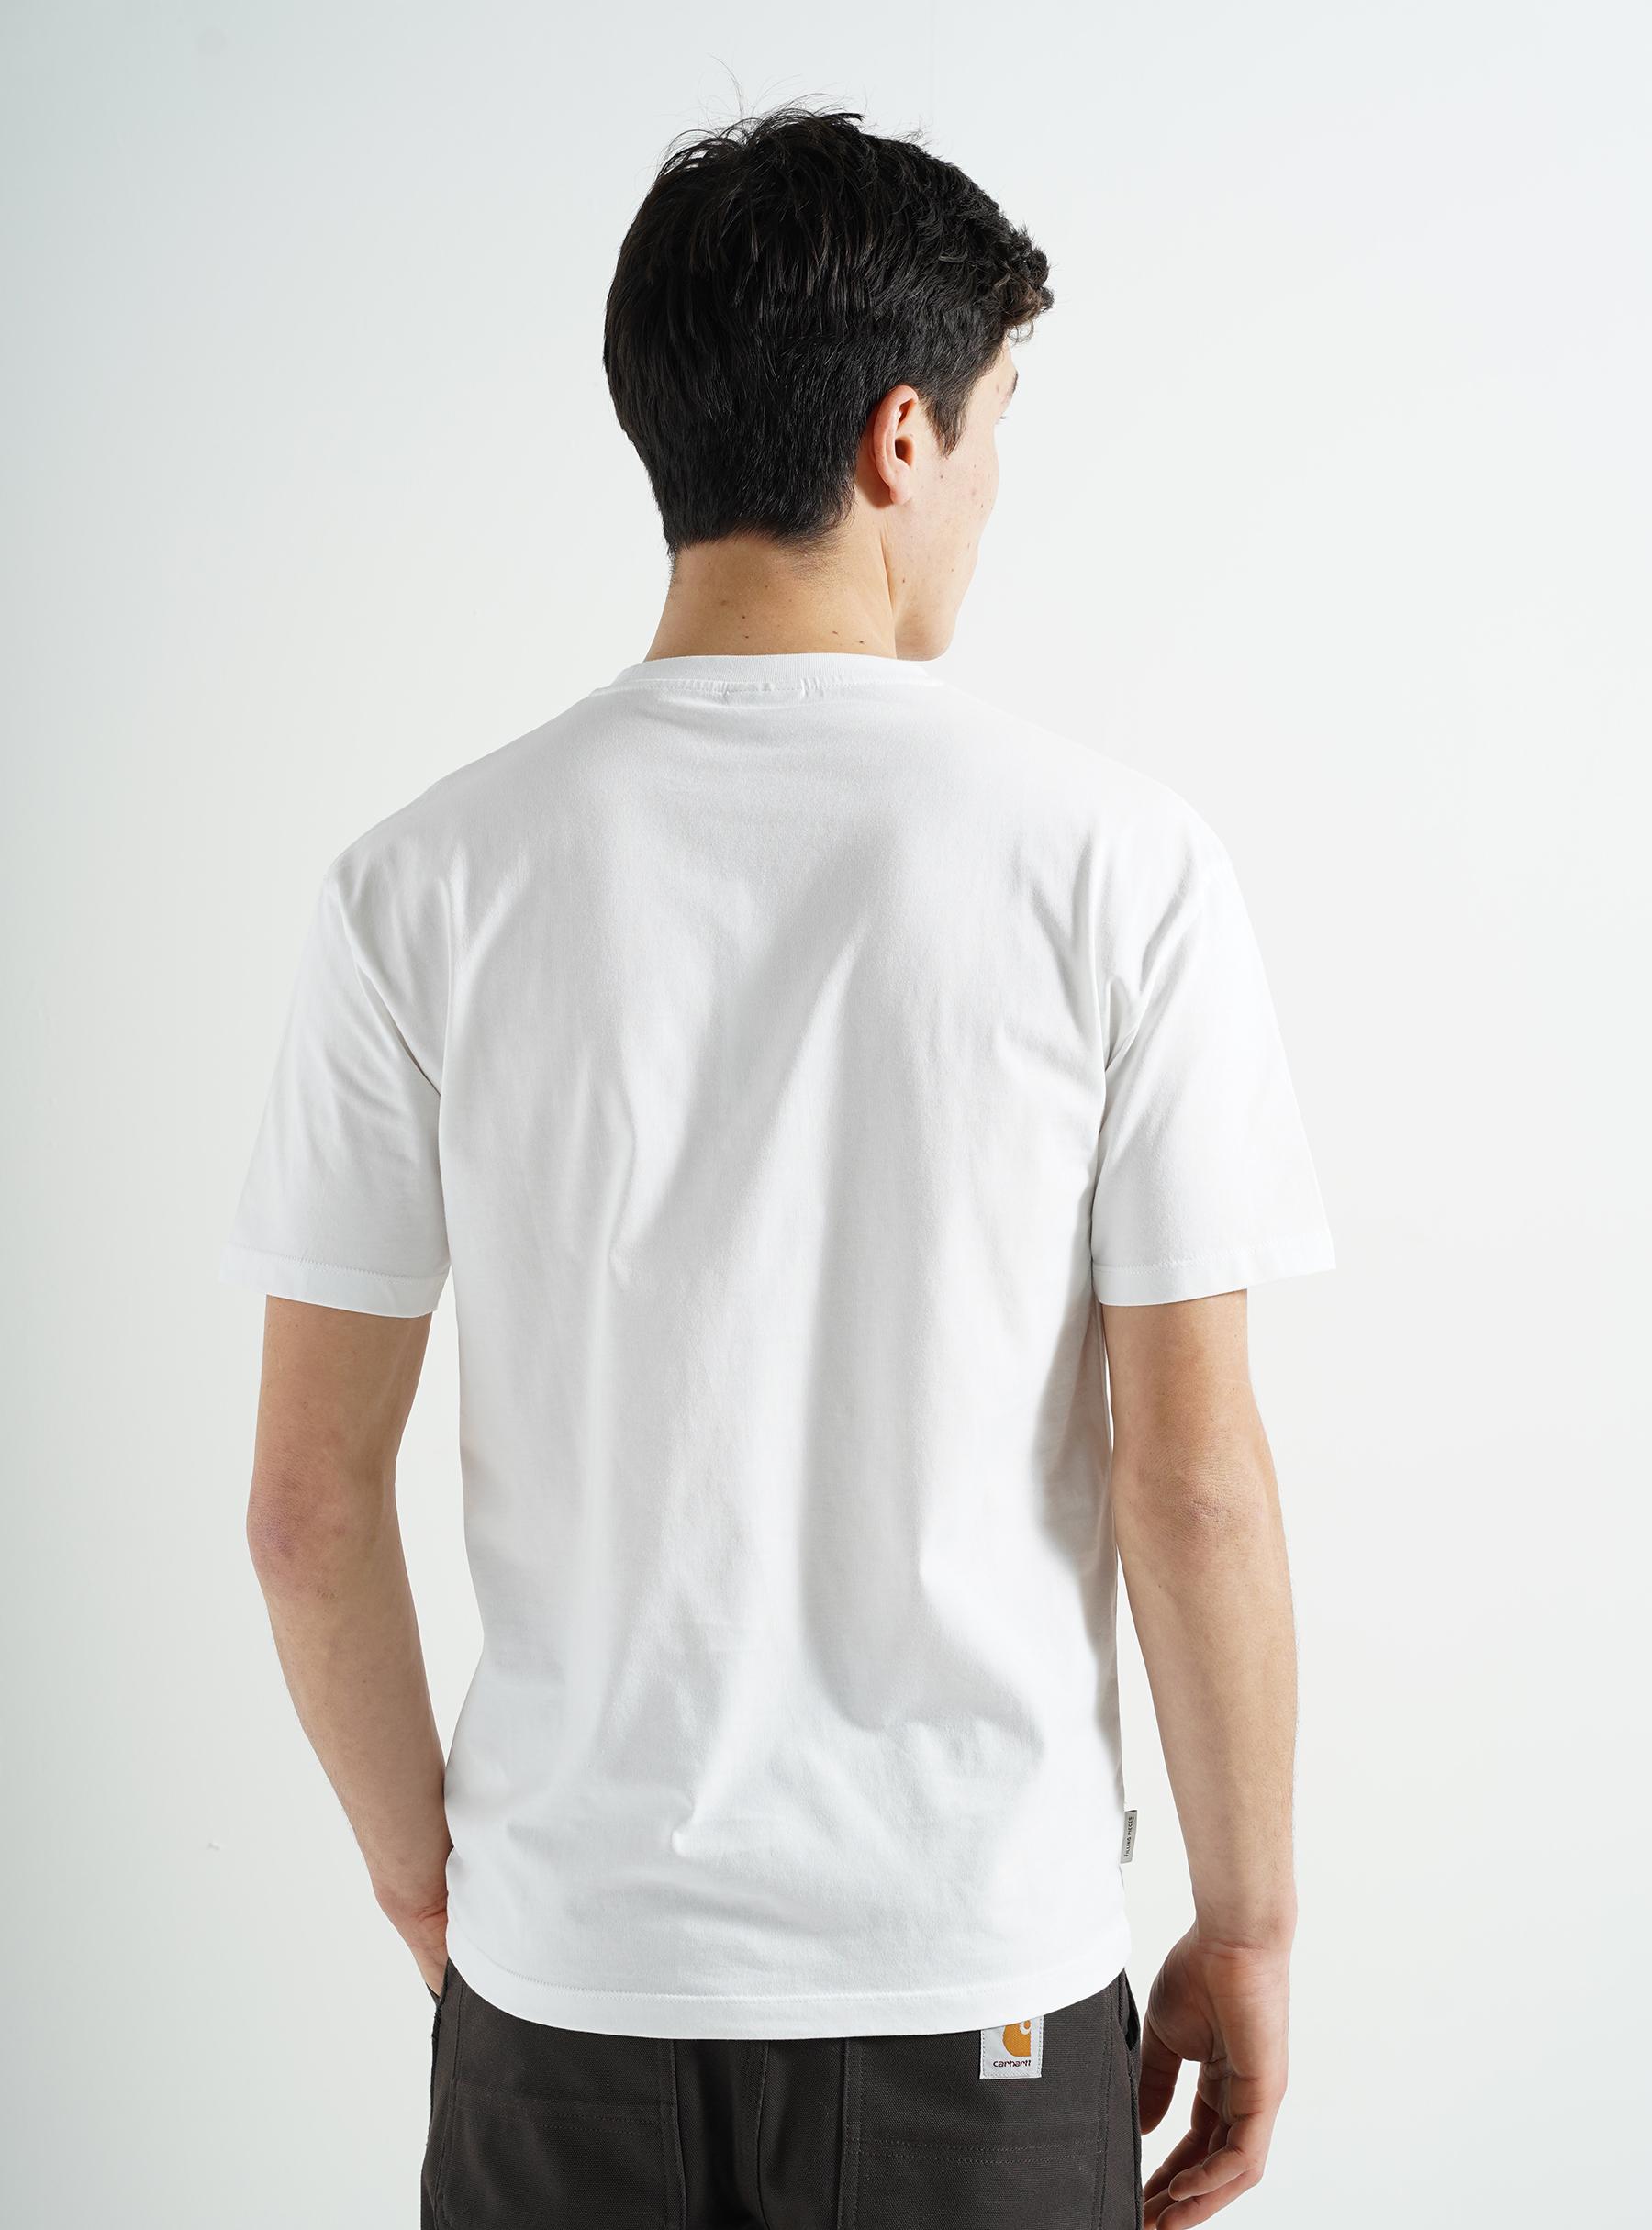 T-shirt Slim White 74434001901